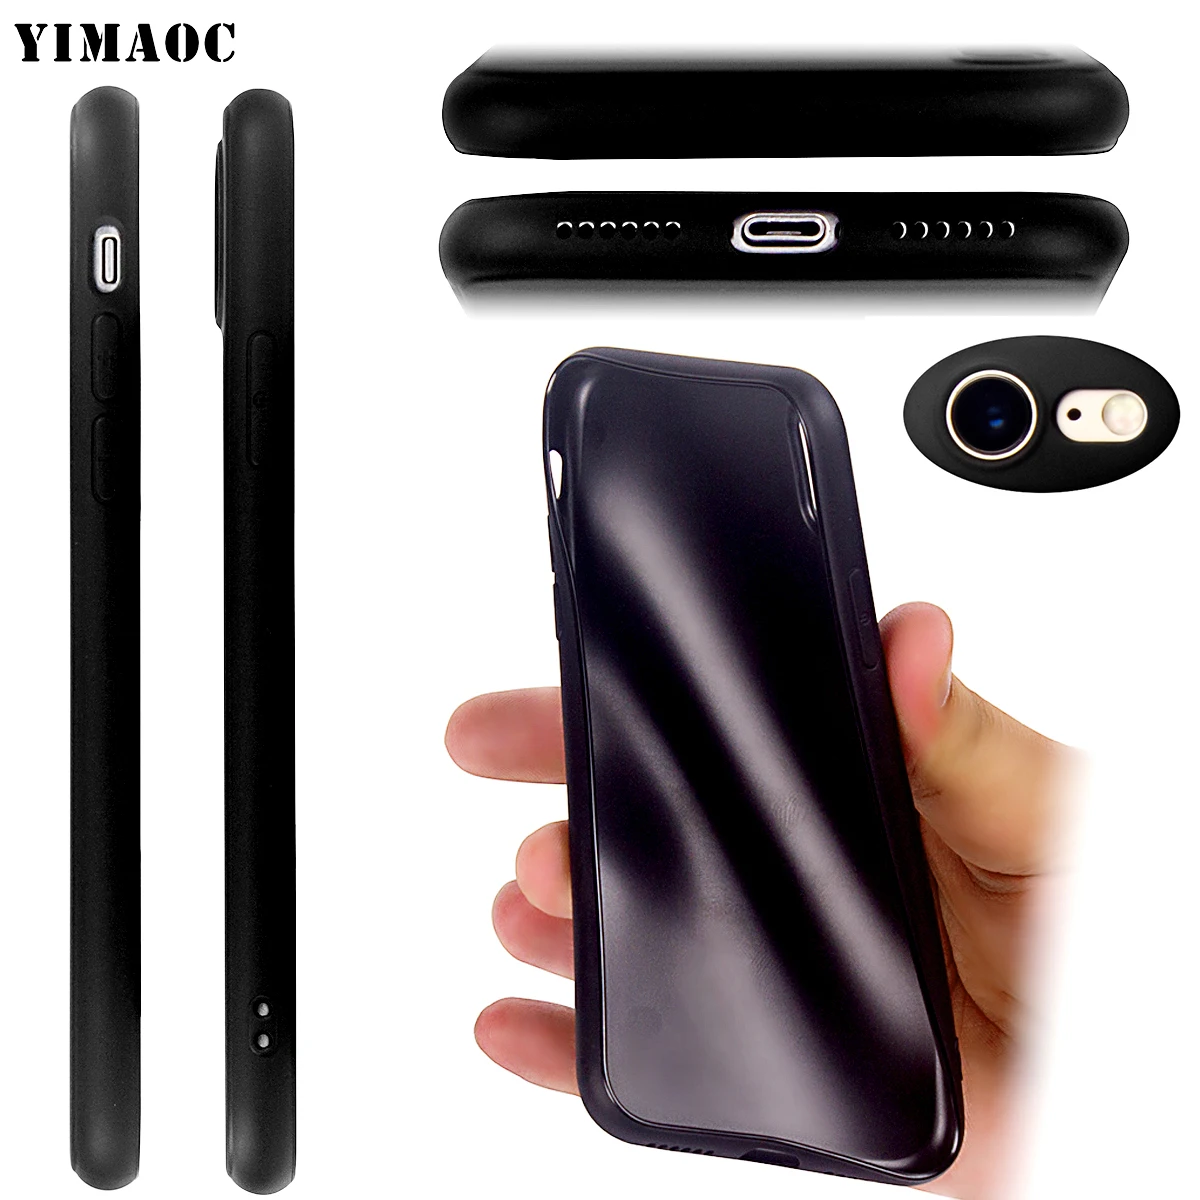 YIMAOC Рик и Морти Мягкий силиконовый чехол для iPhone 11 Pro XS Max XR X 8 7 6 6S Plus 5 5S se